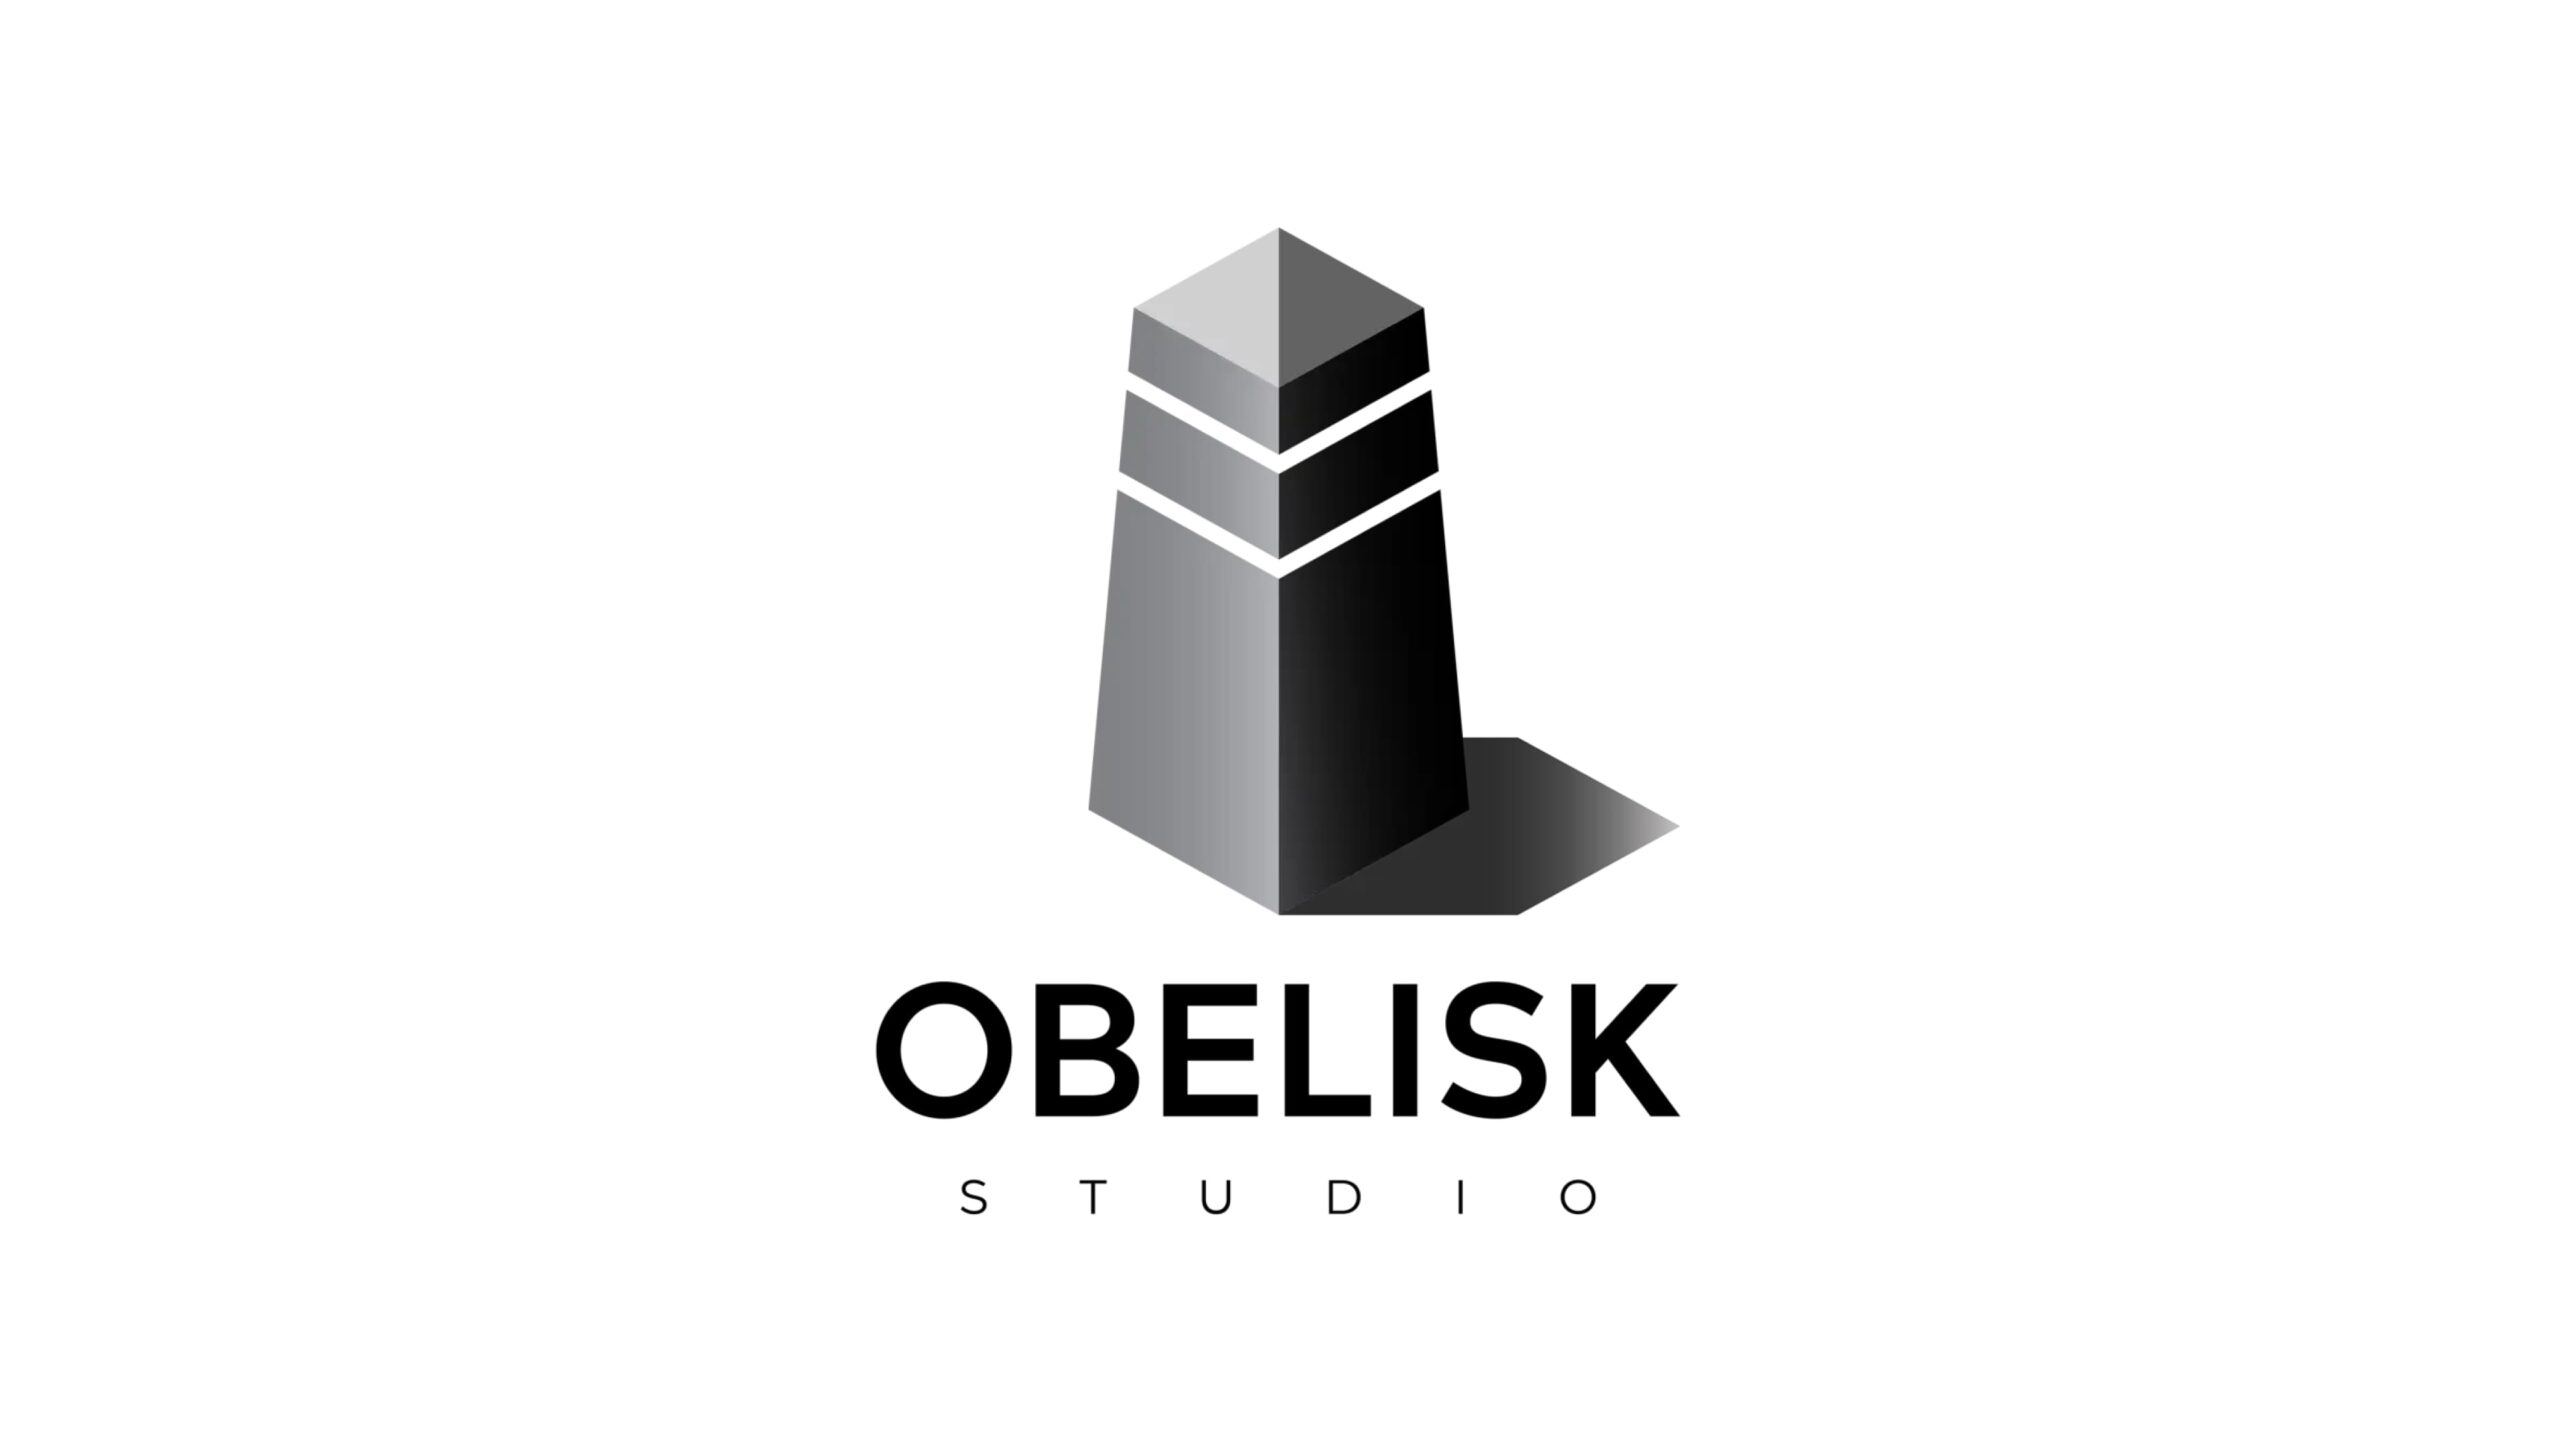 Obelisk Studioが200万ドルを調達、コード開発から自社IPに軸足を移す